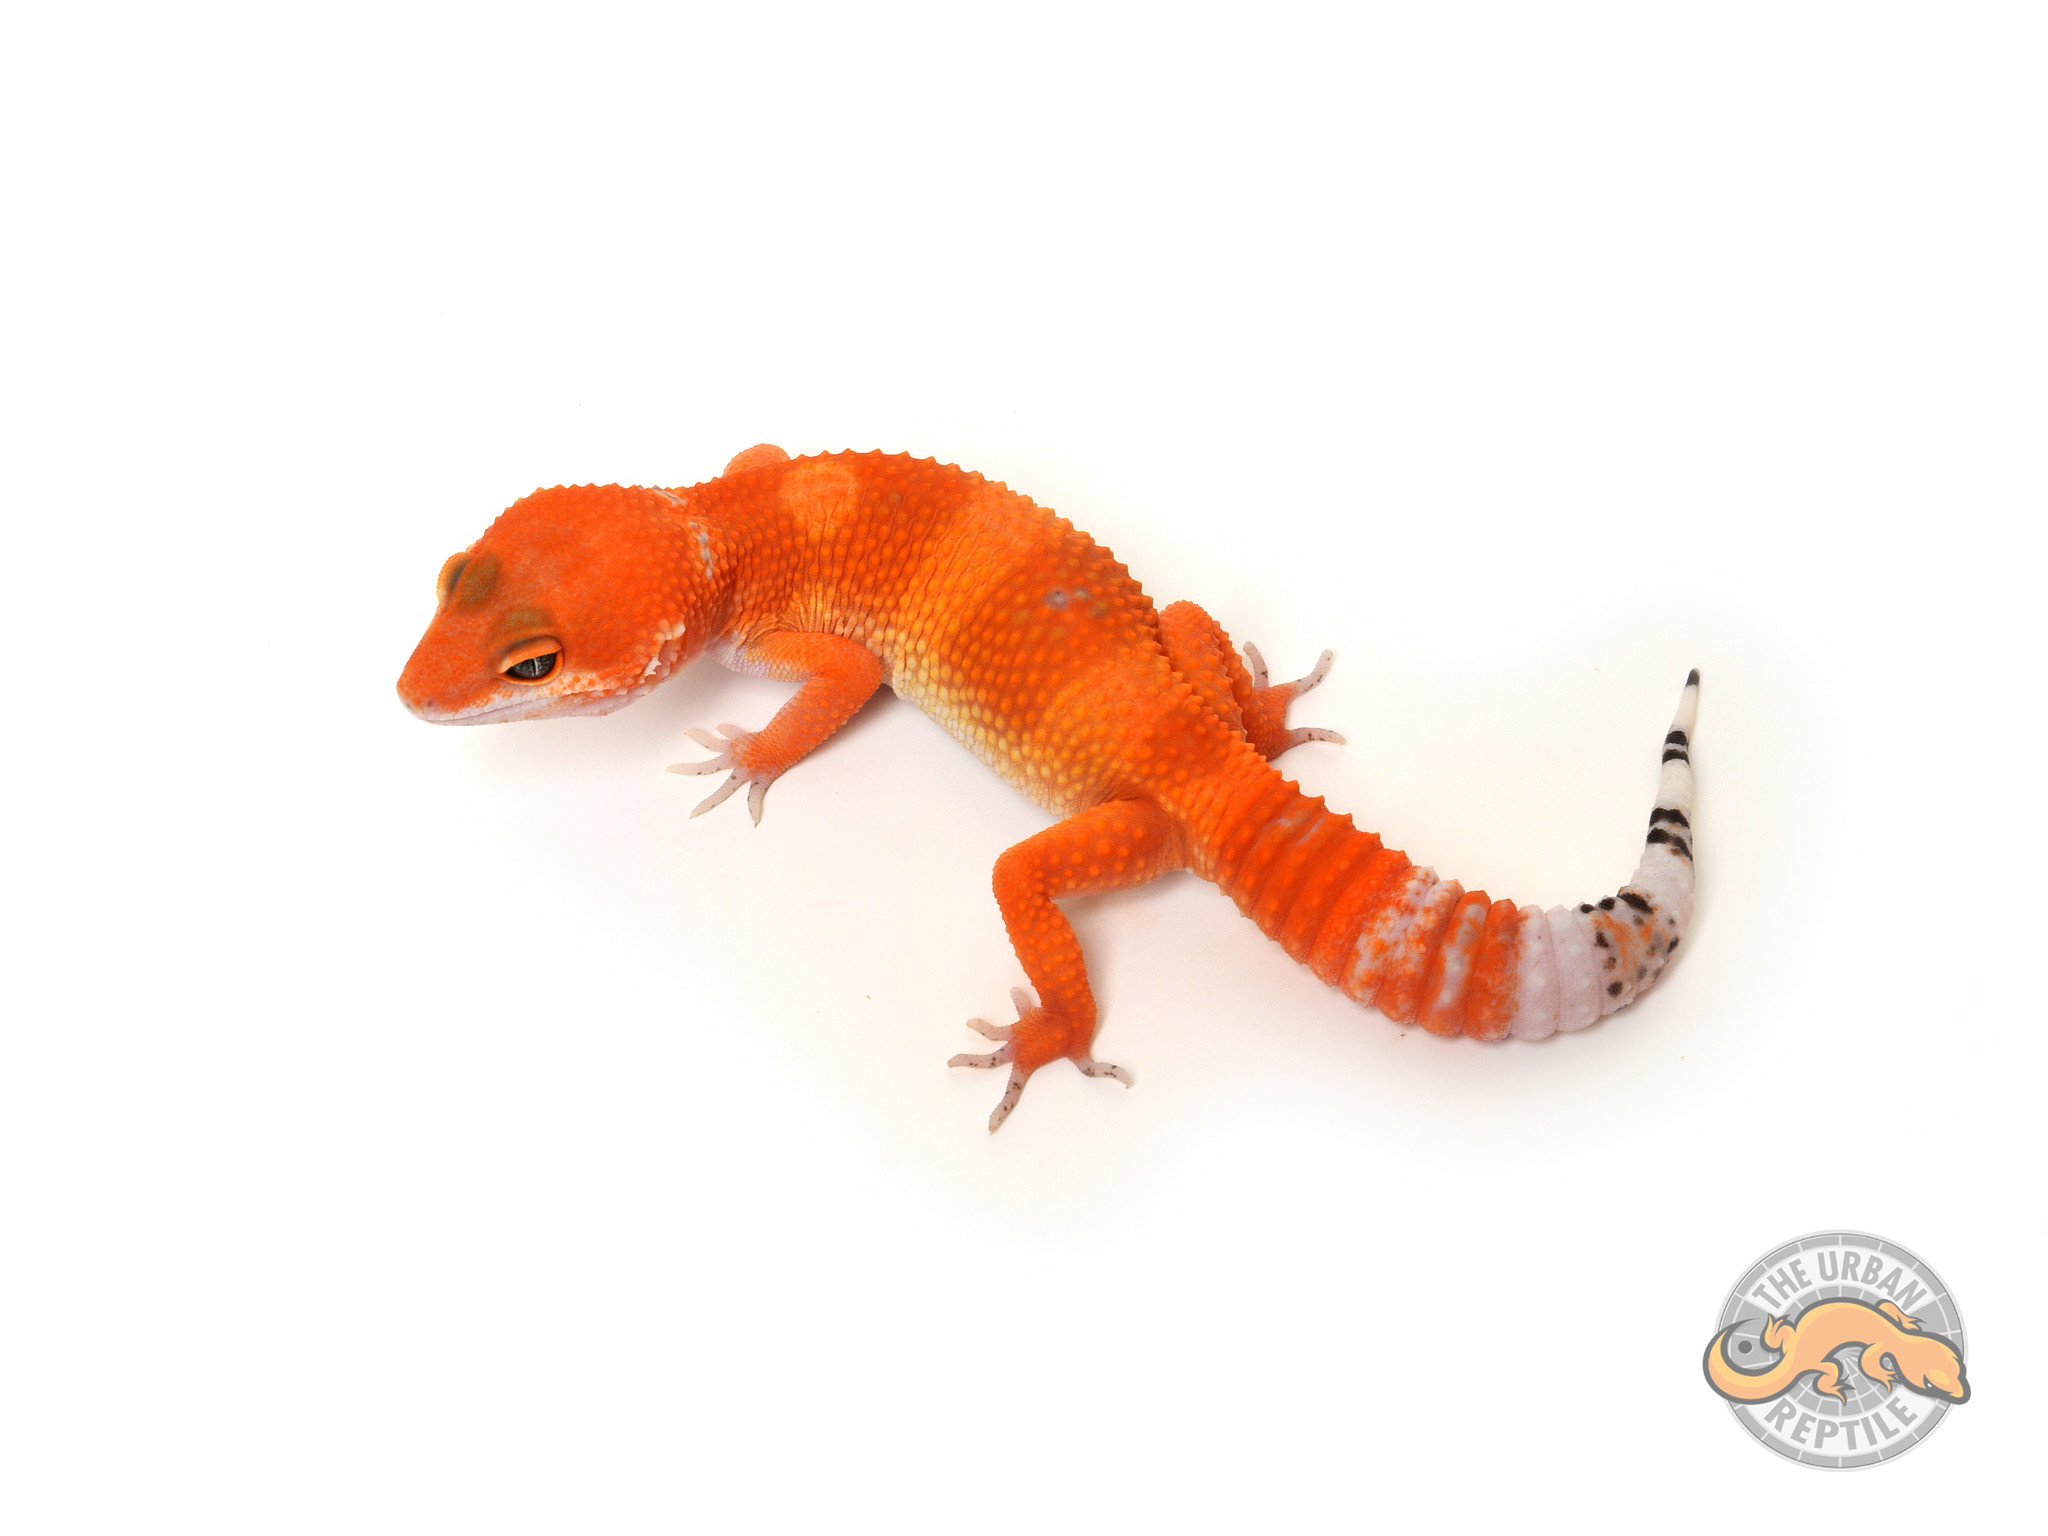 Tangerine Tornado Leopard Gecko by The Urban Reptile